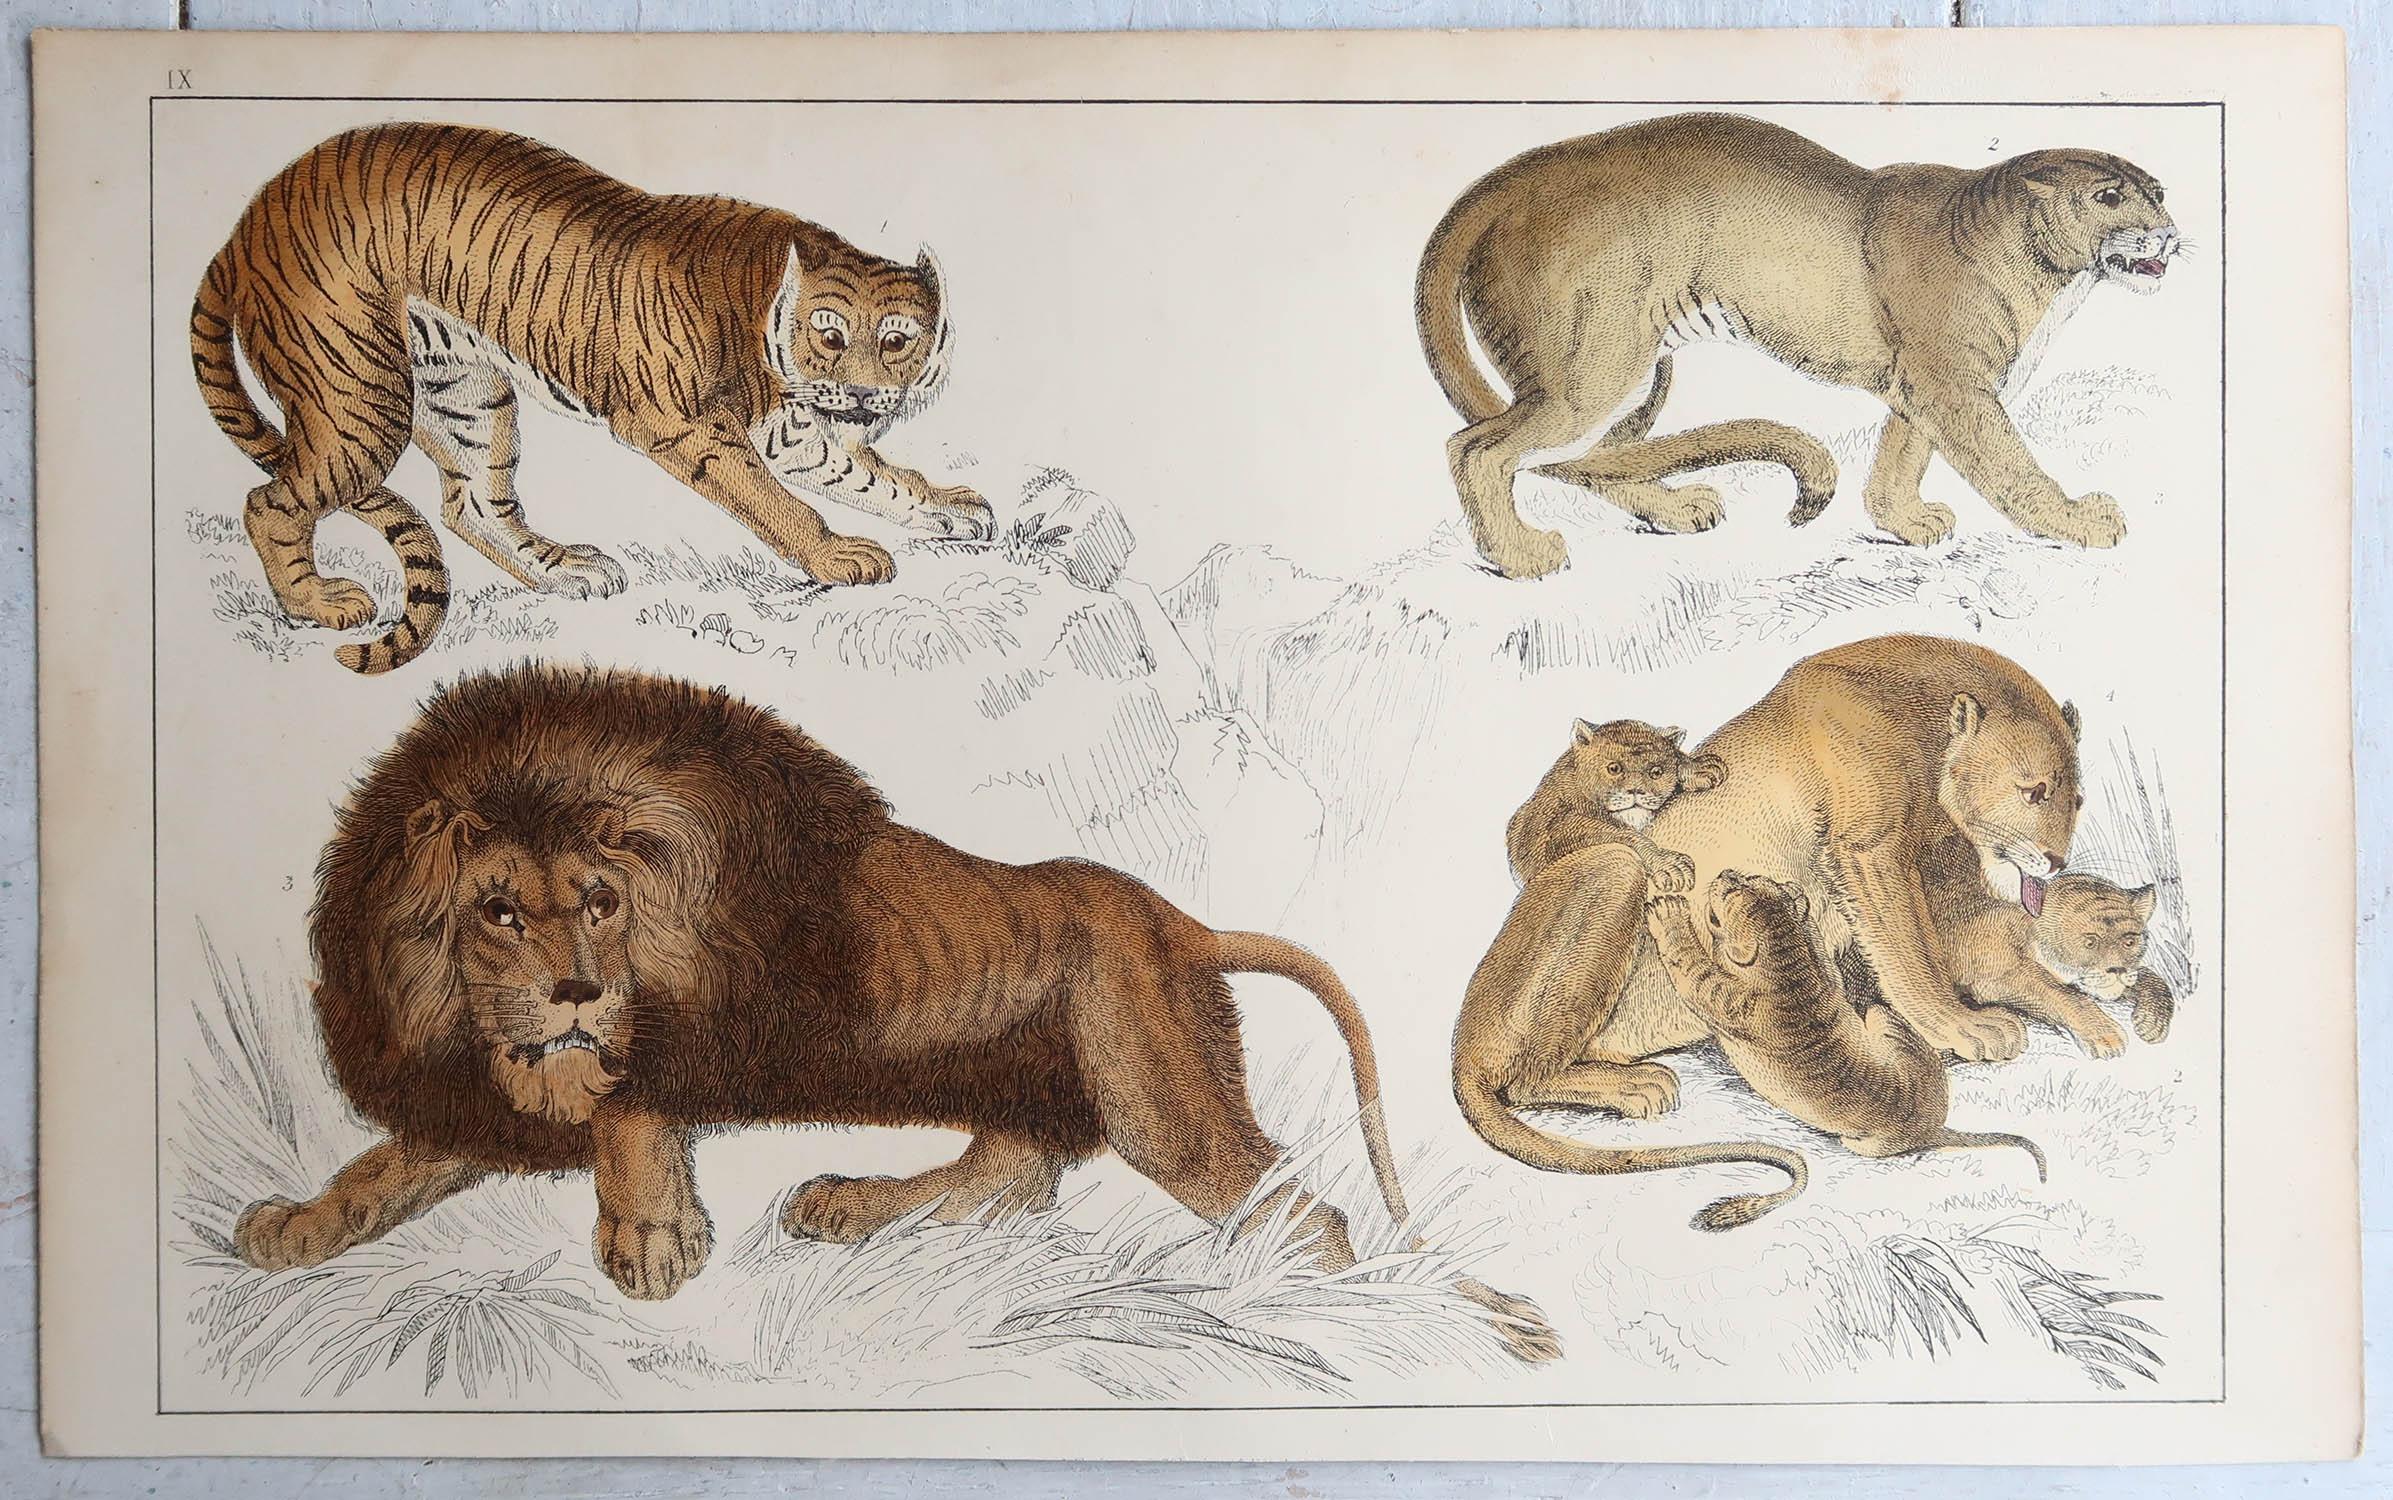 Folk Art Original Antique Print of Lions and Tigers, 1847 'Unframed' For Sale